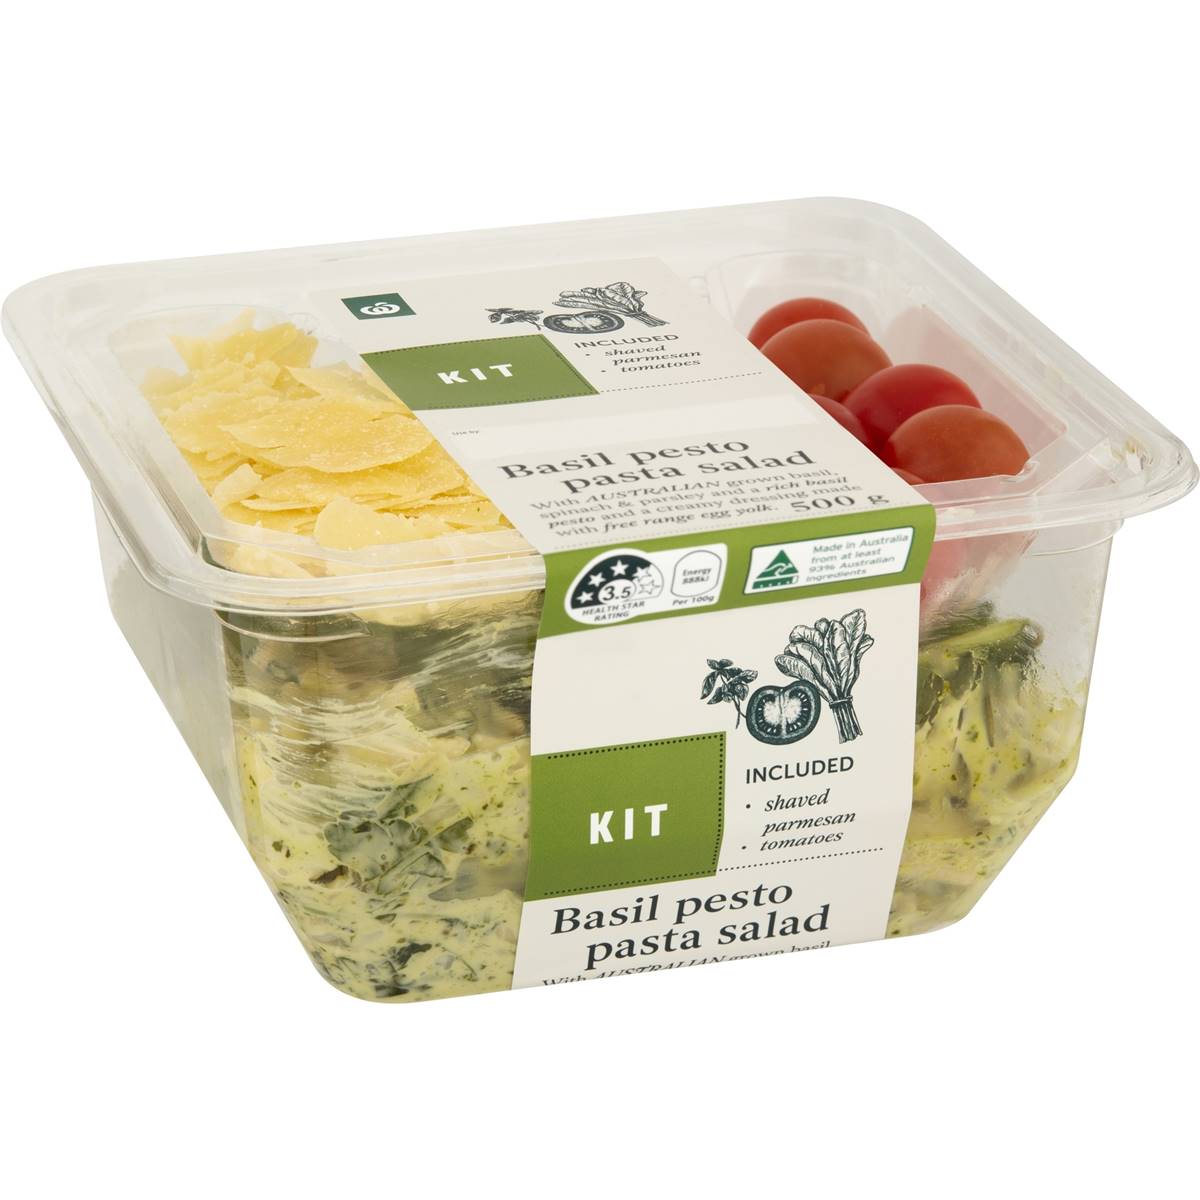 Calories in Woolworths Basil Pesto Pasta Salad Kit